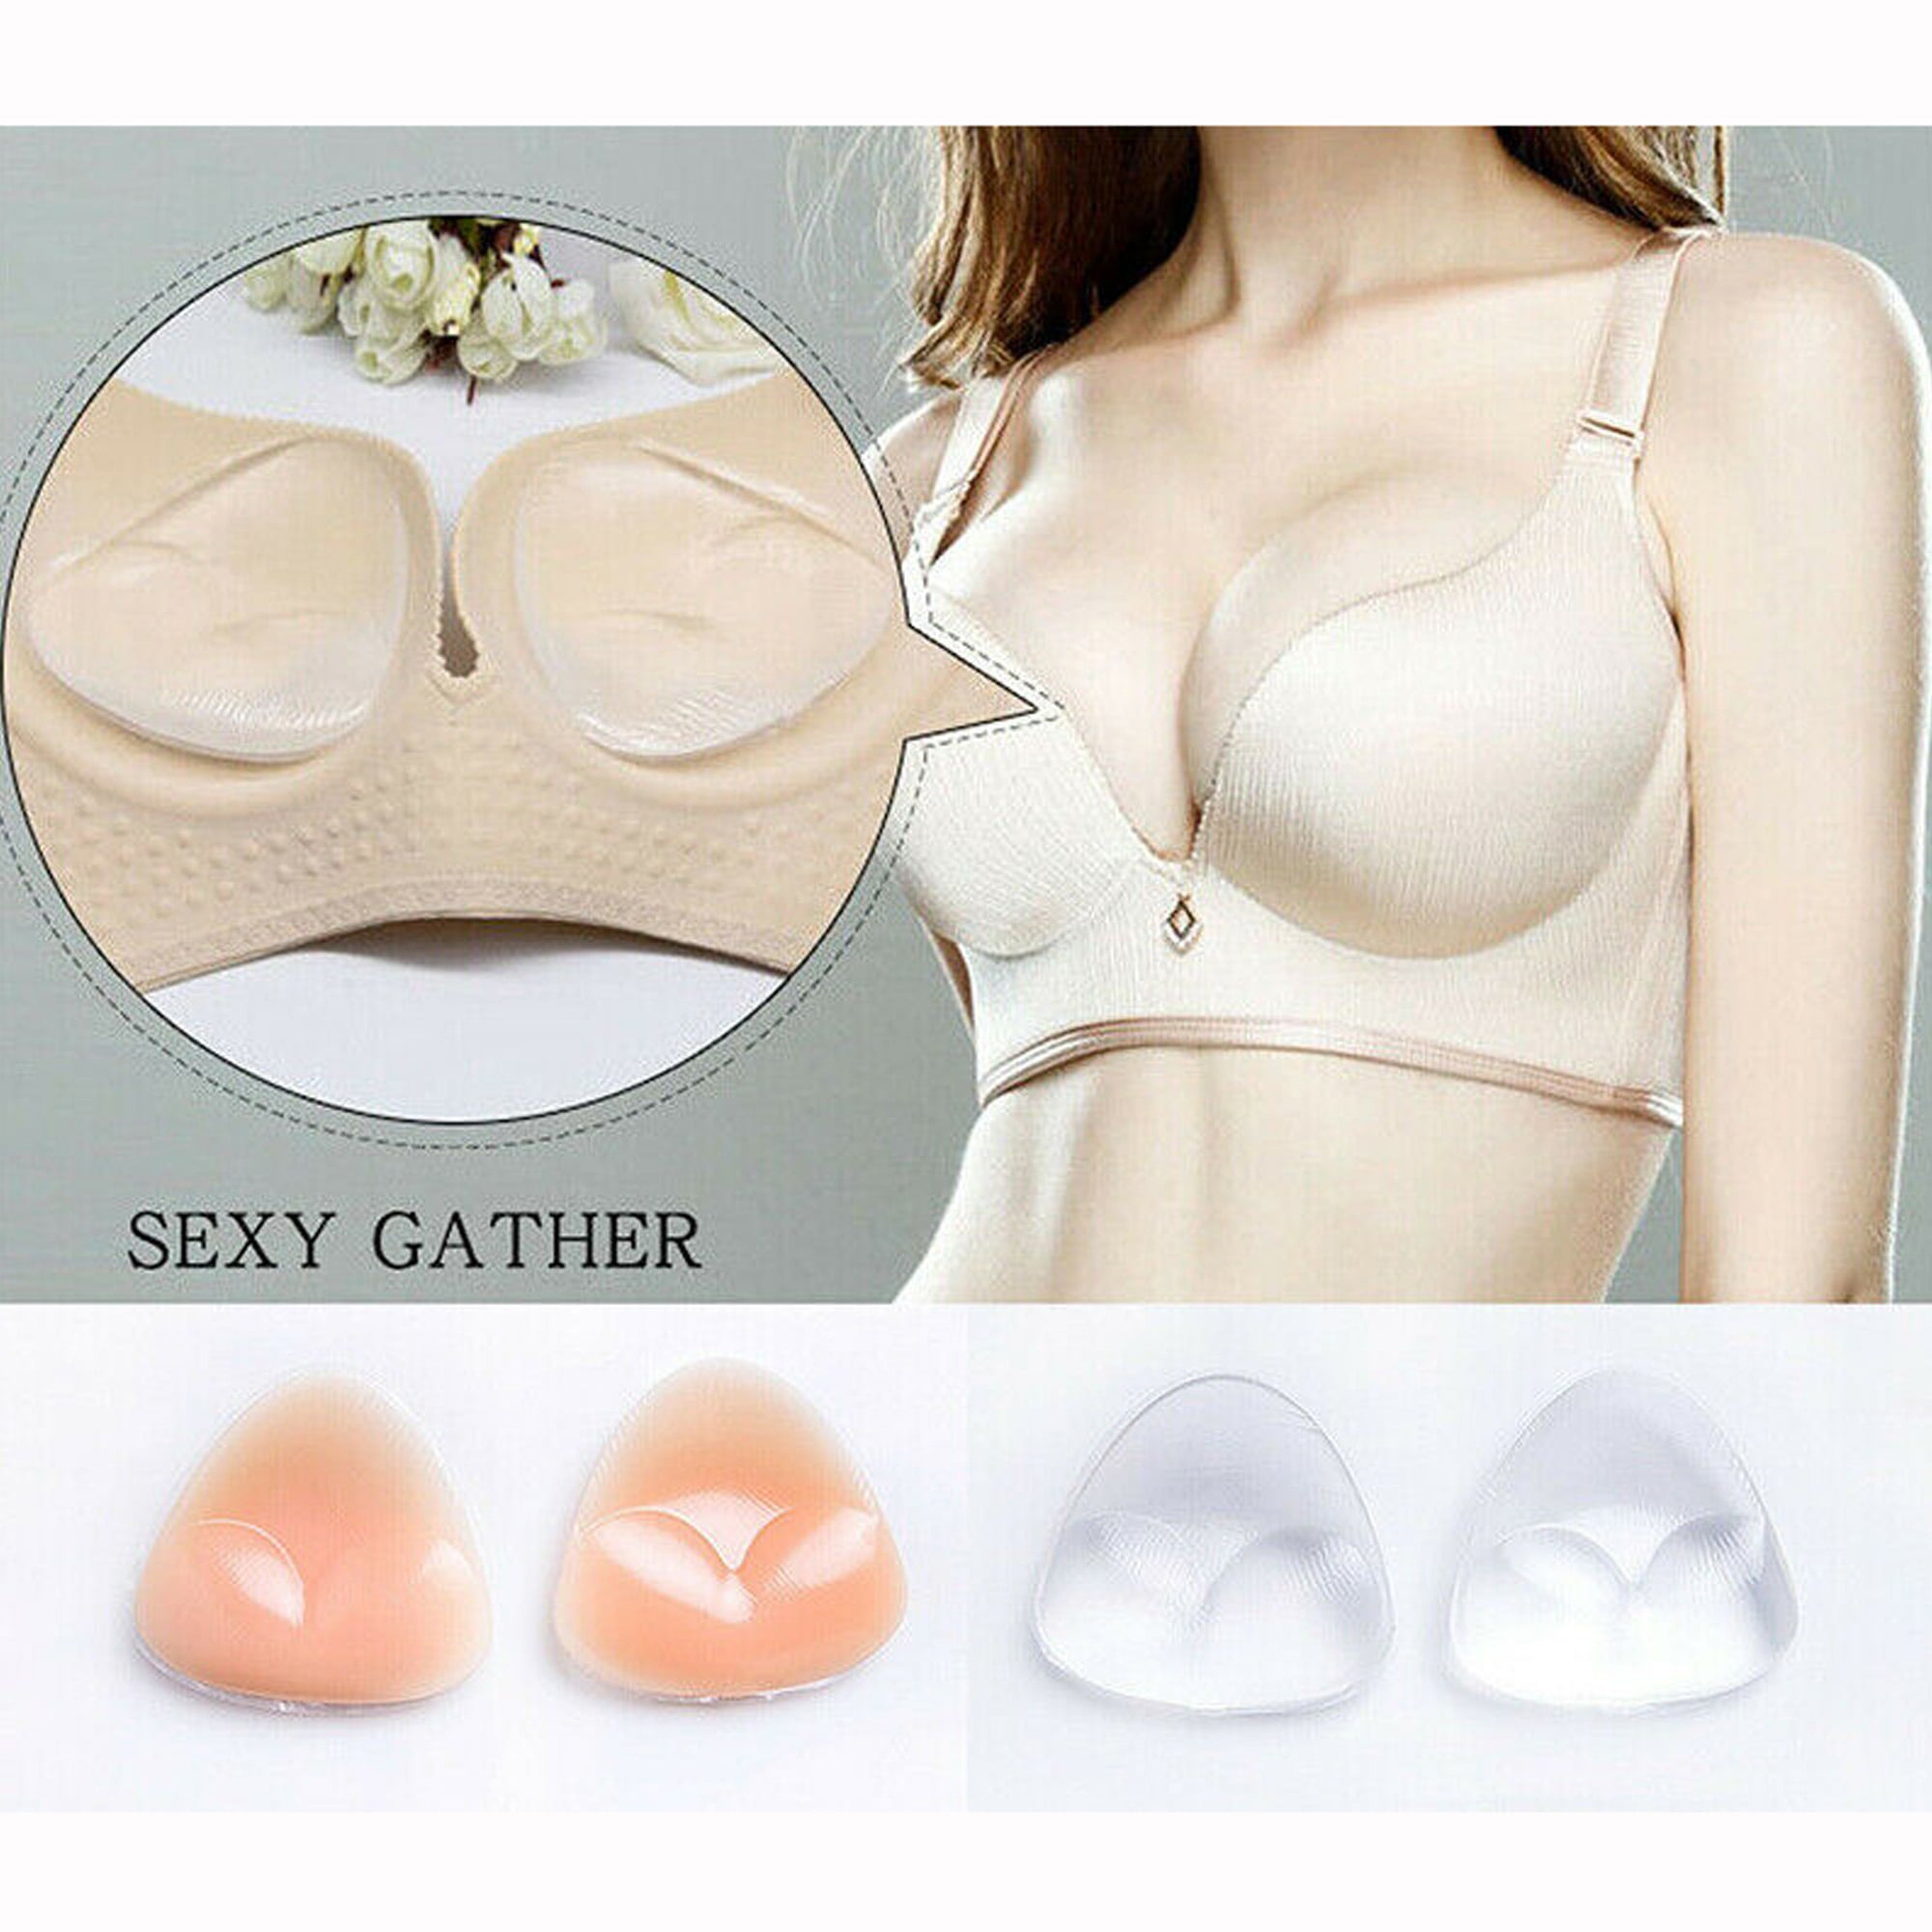 Sponge Removable Breast Push Up Lifting Bra Pads Insert Enhancer Bikini Accs.